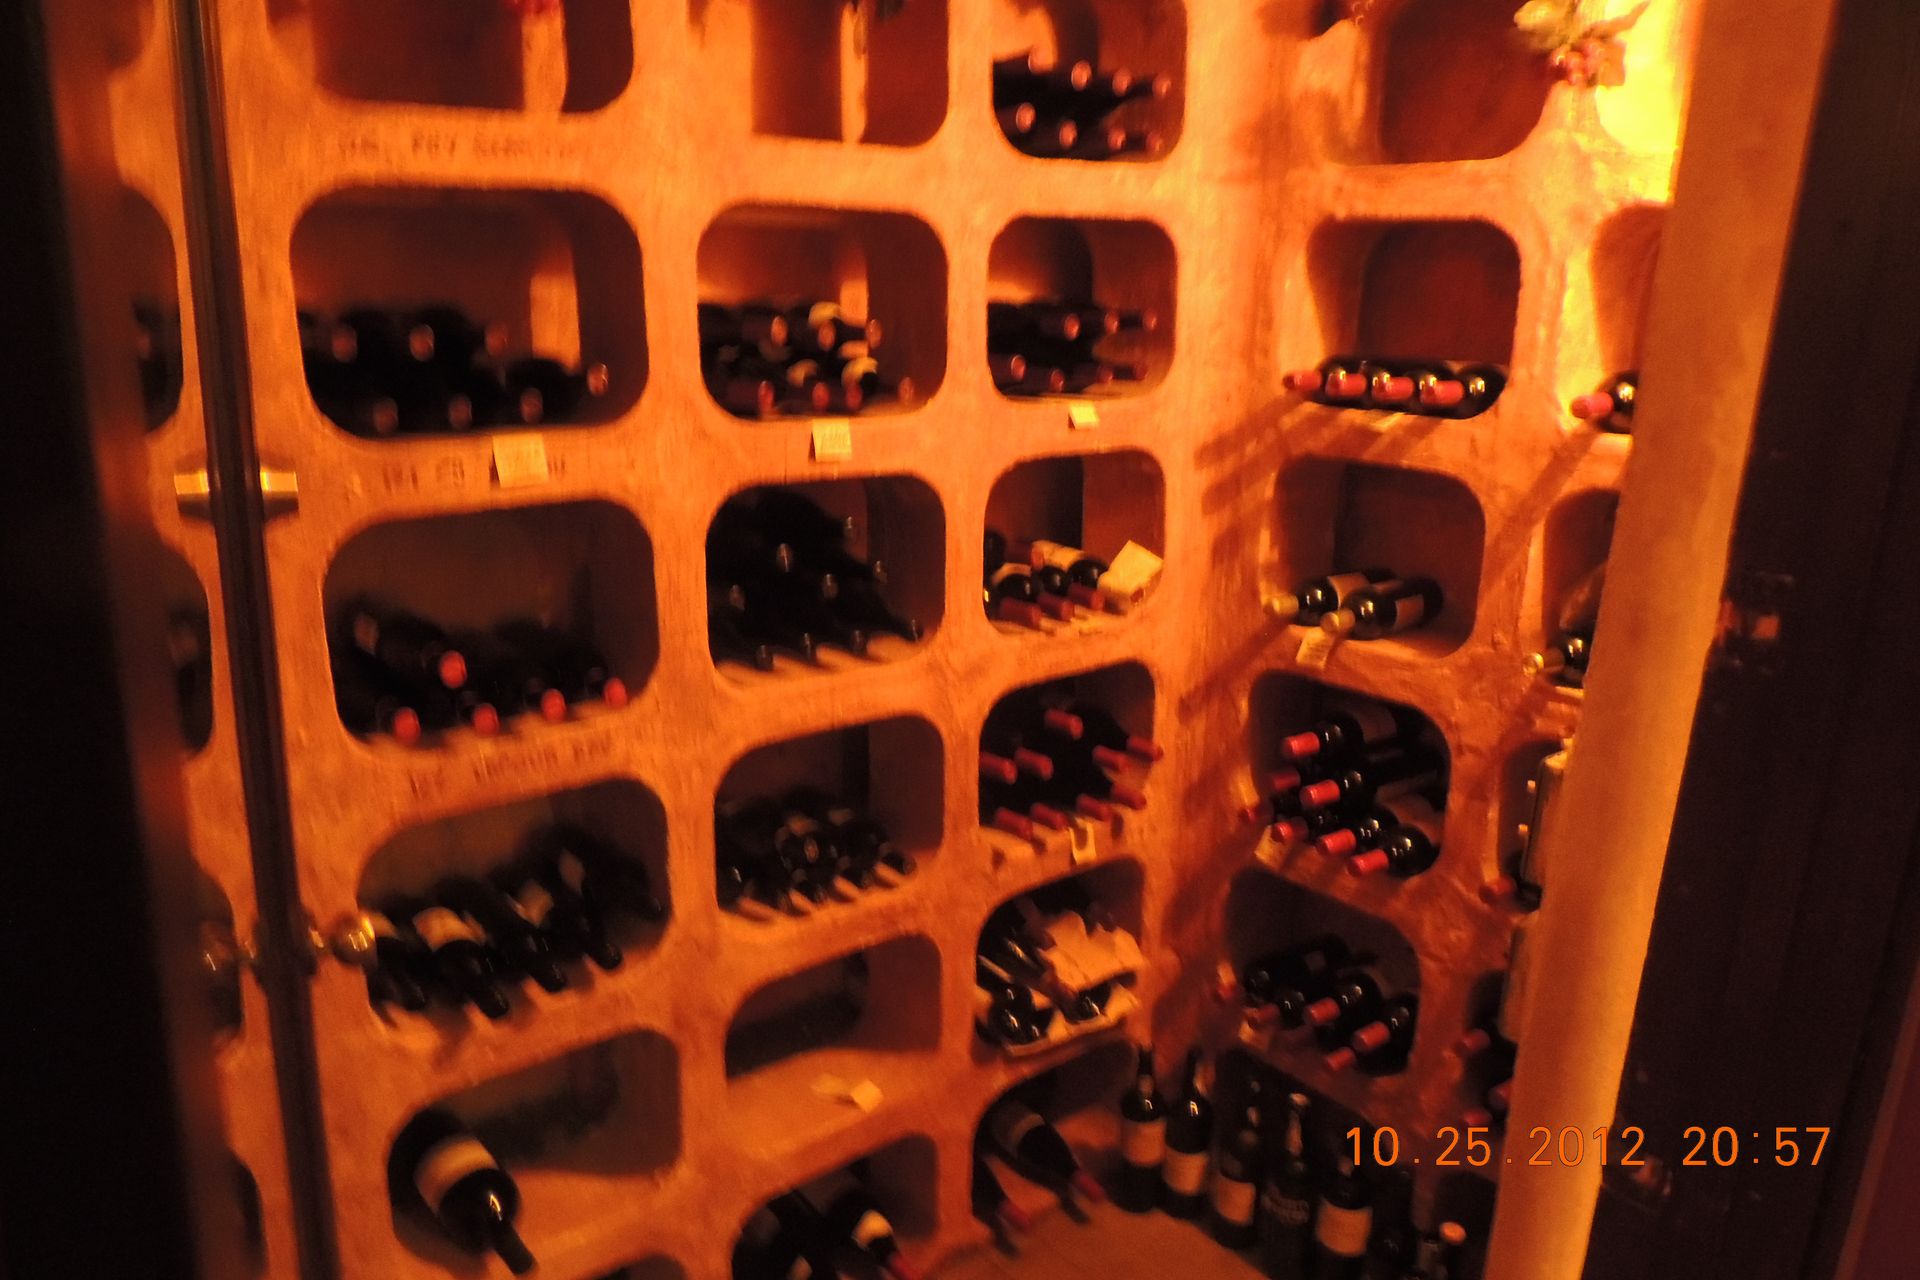 Red wine cave in semi-private room